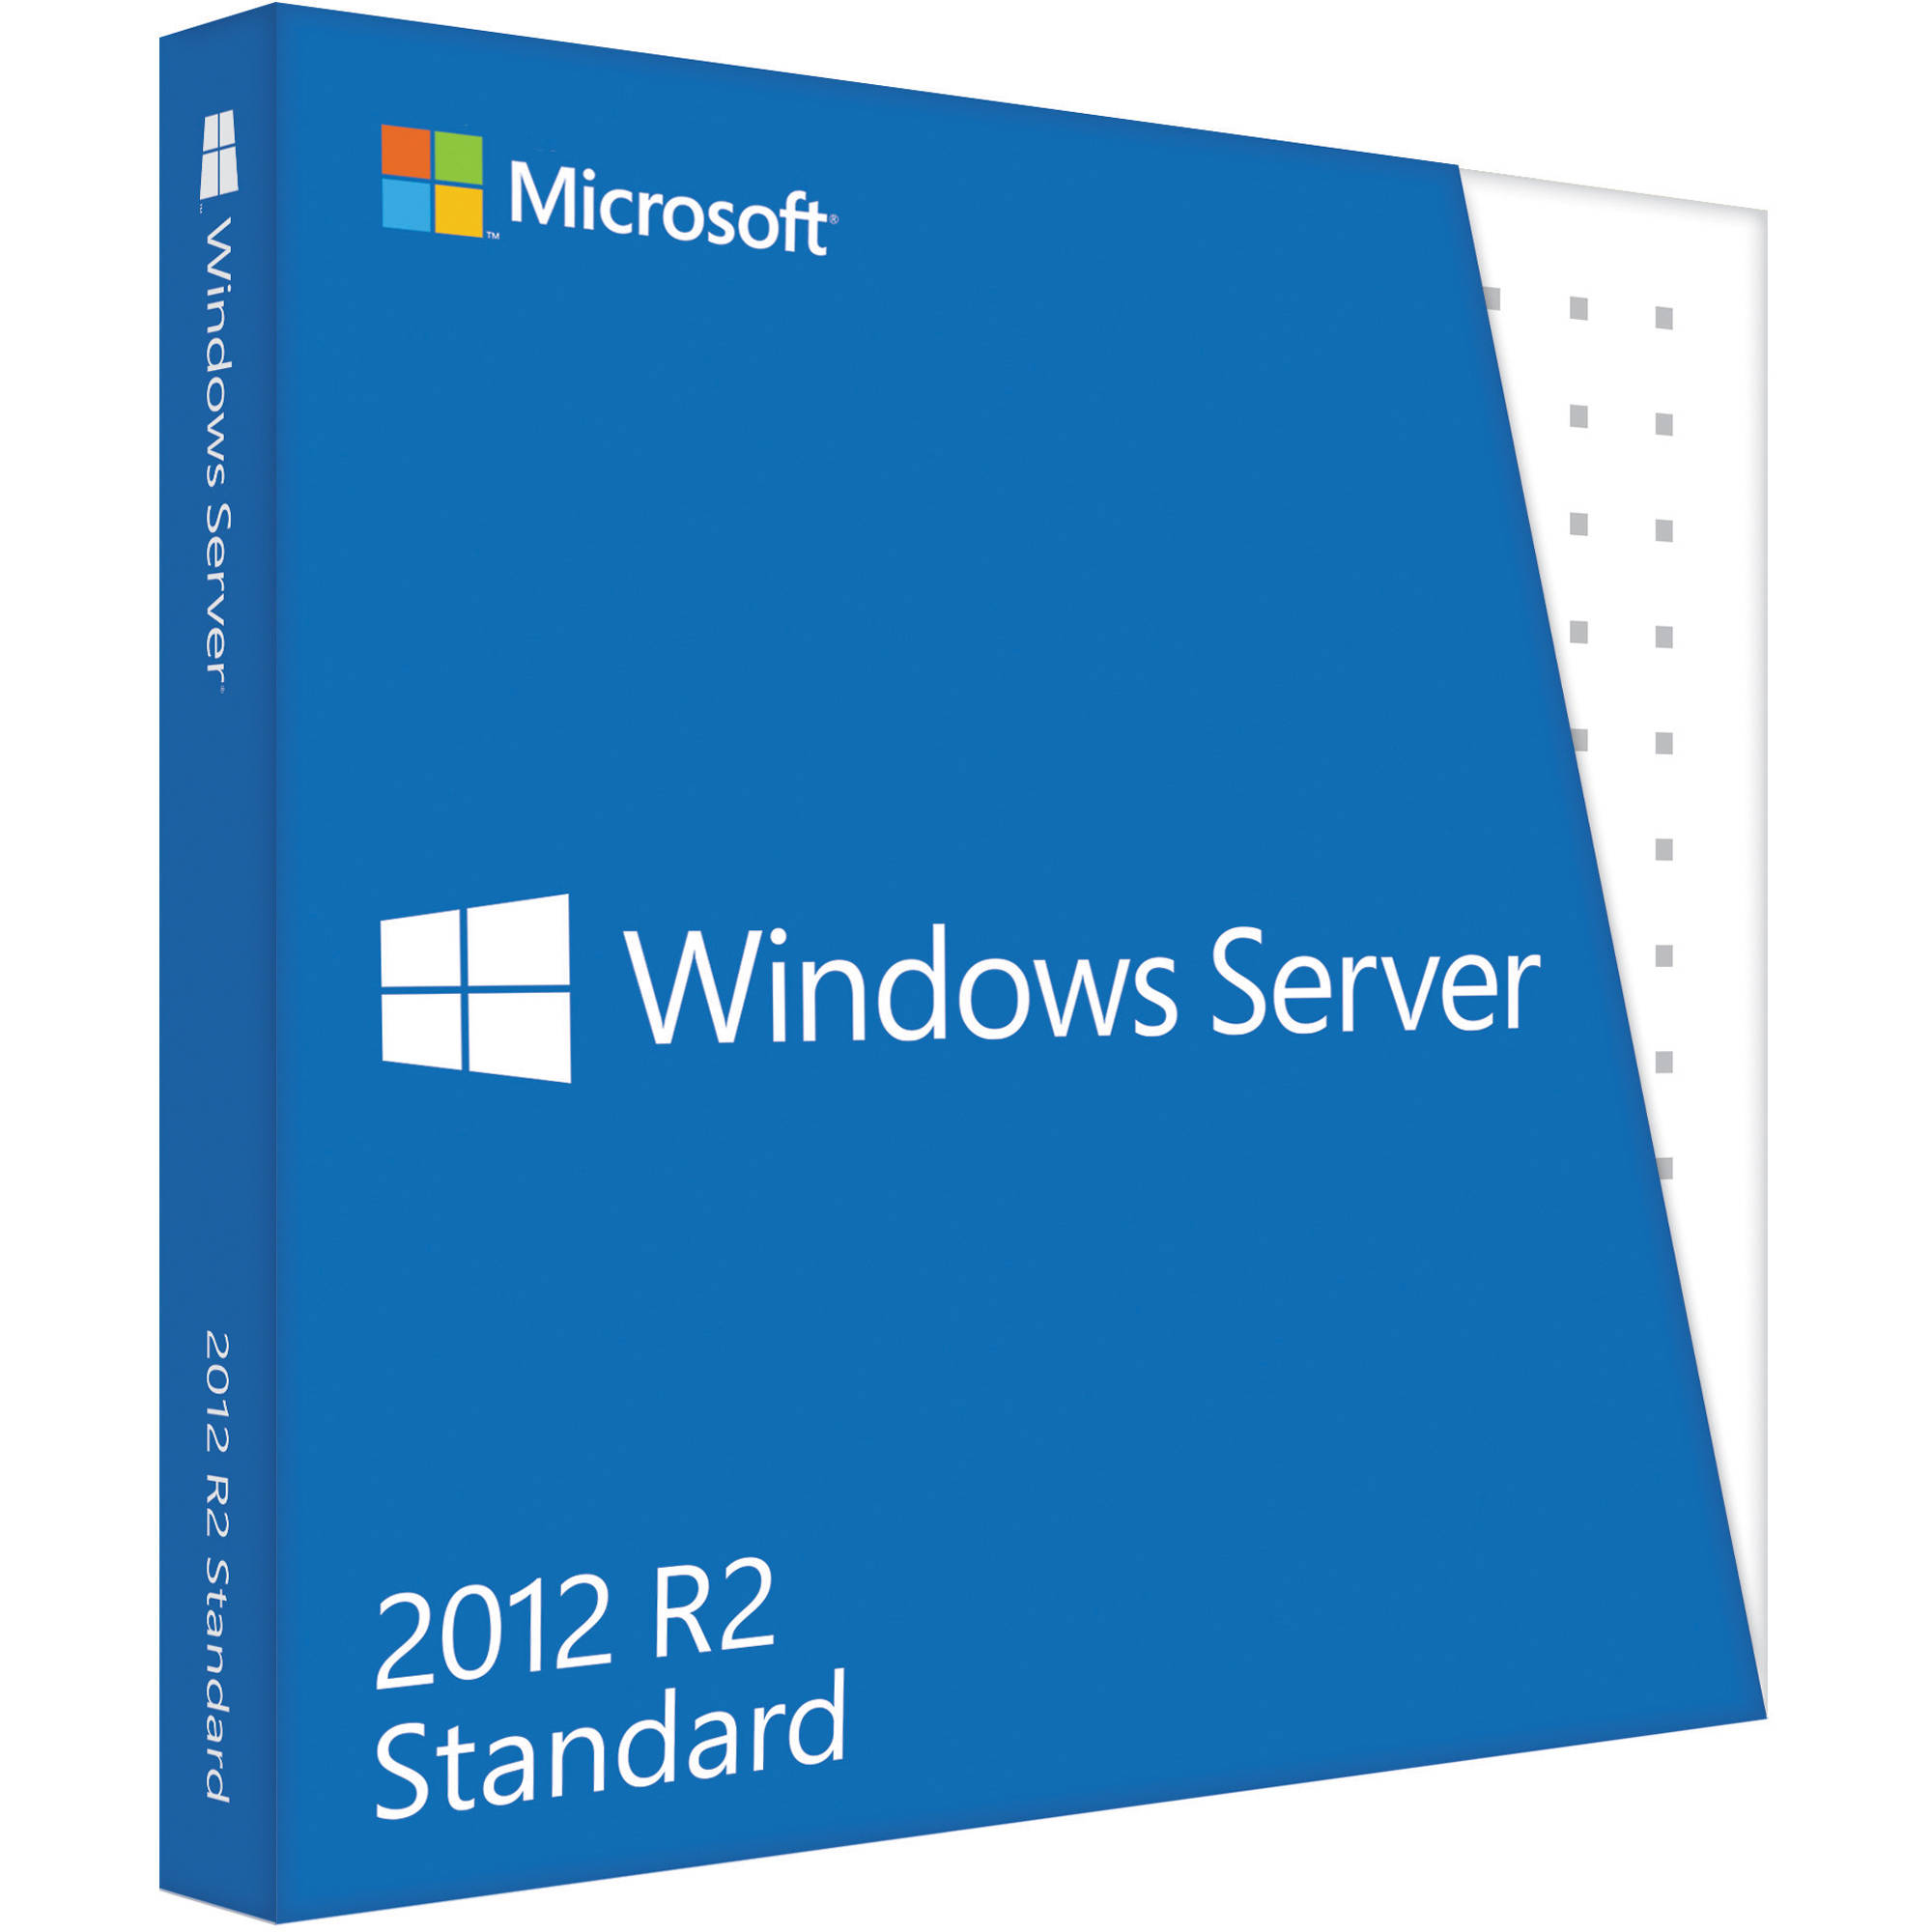 Windows Server 2012 R2 lisansı